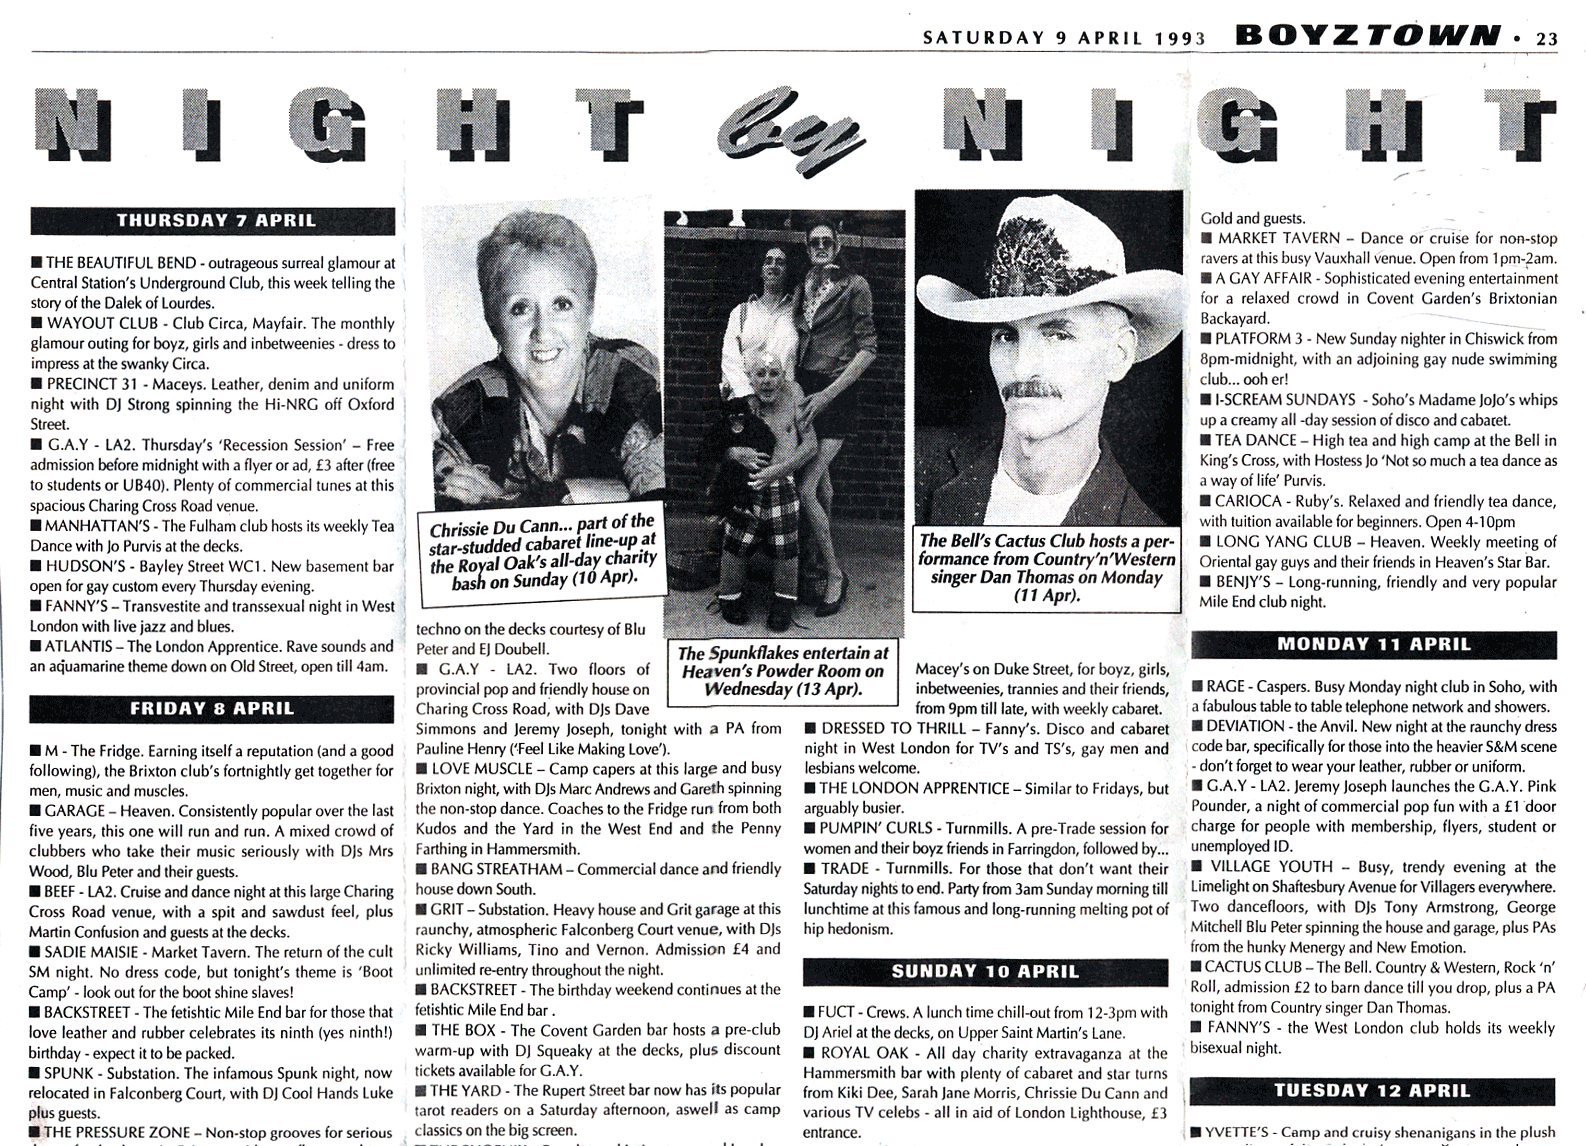 1994-04-13-SF-Powder-Room-Boyztown-news